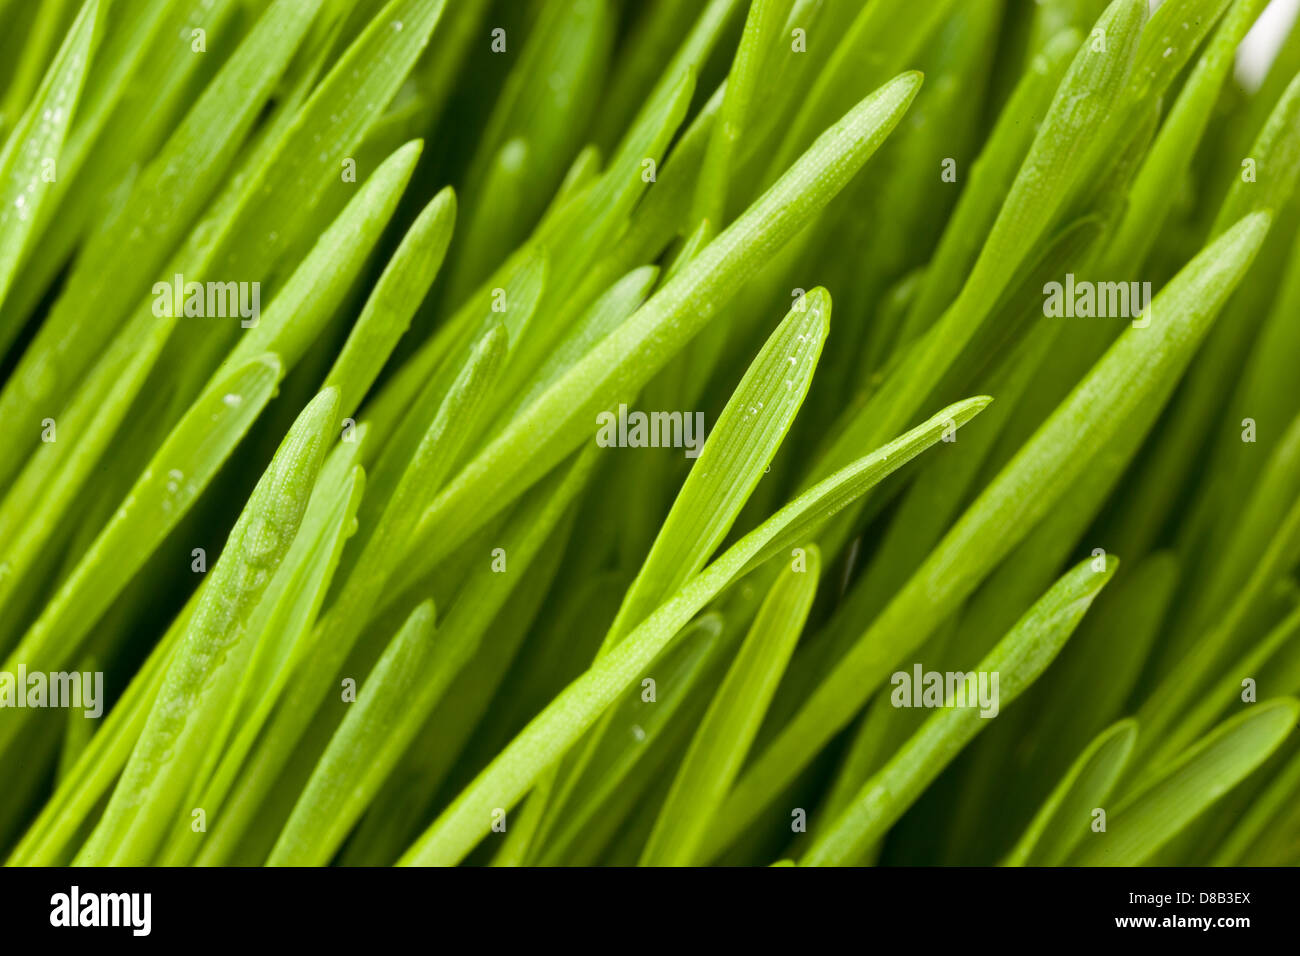 Fresh Green Organic Wheat Grass against a background Stock Photo